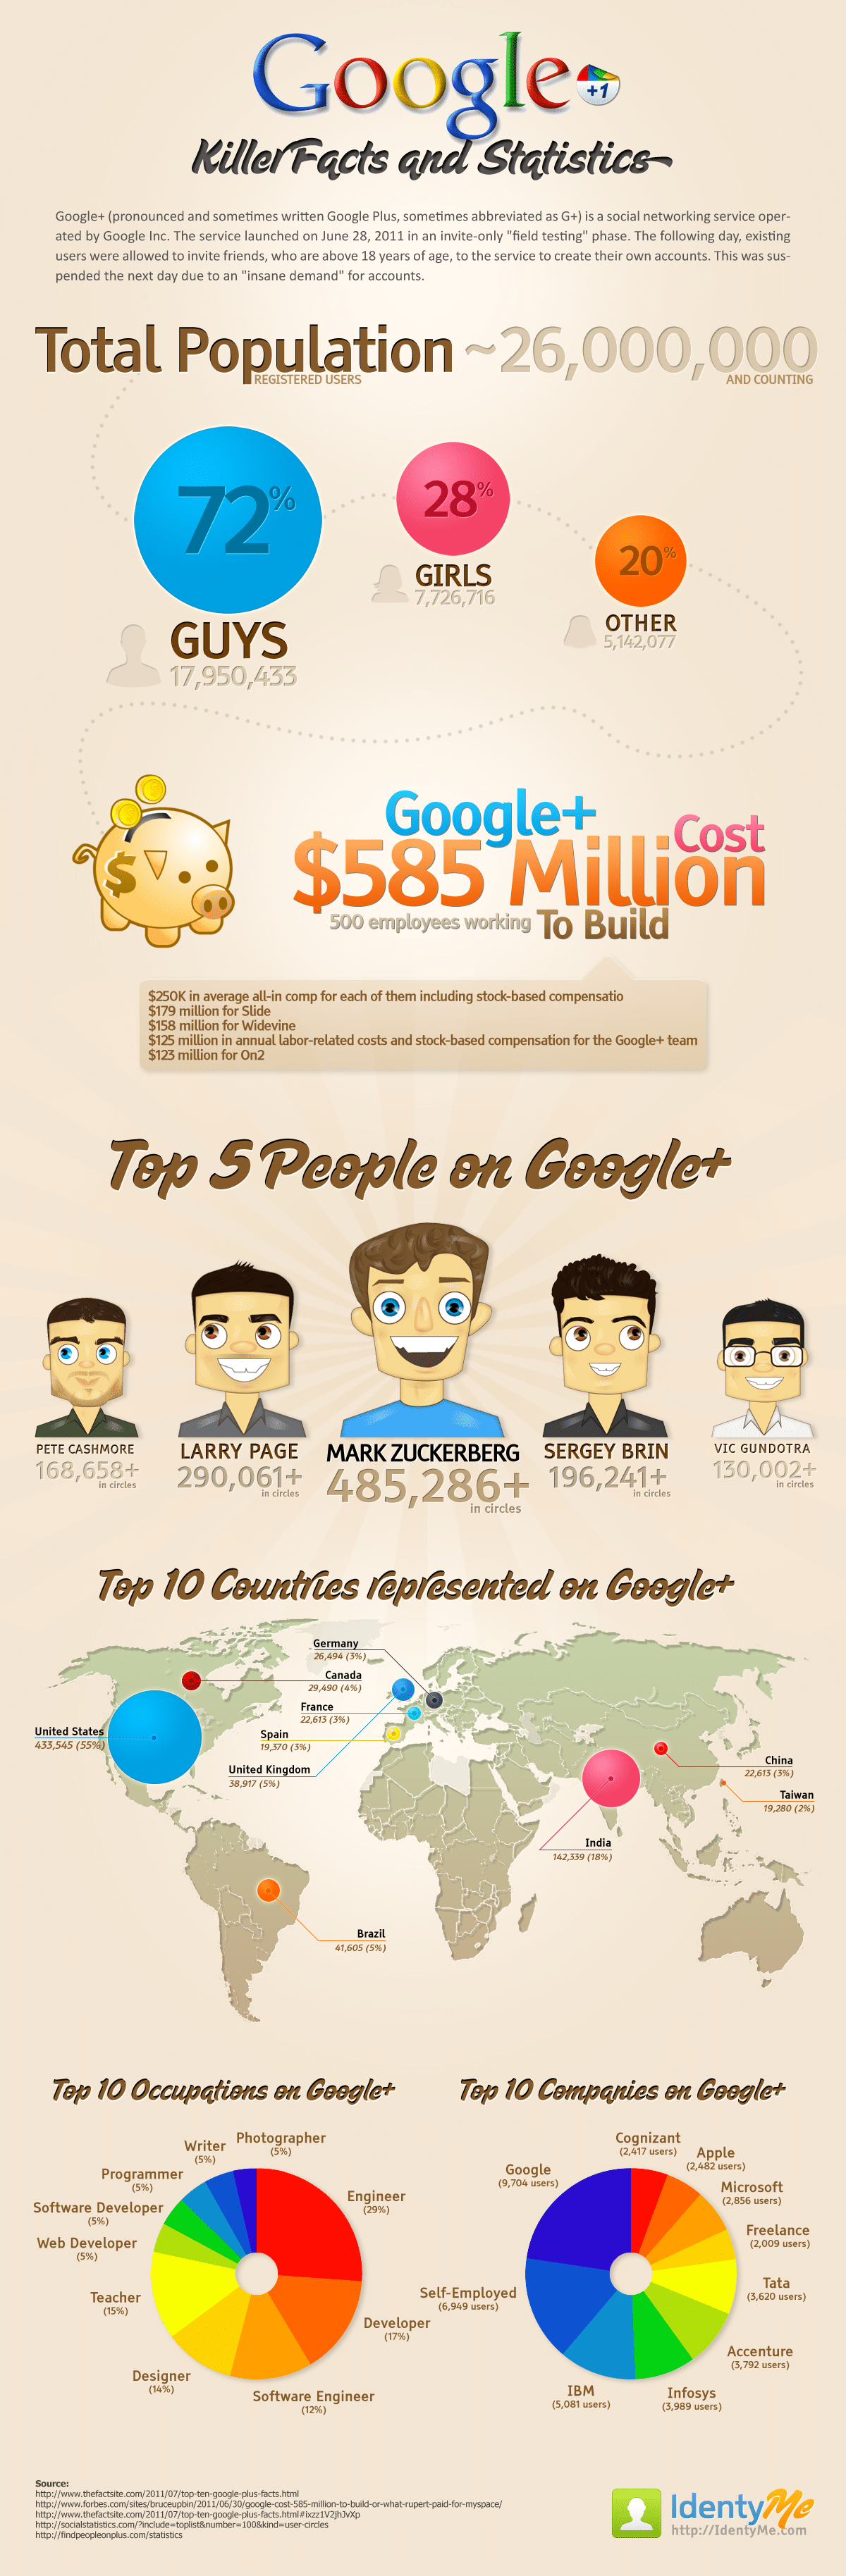 Google+ Killer Facts & Statistics [Infographic]